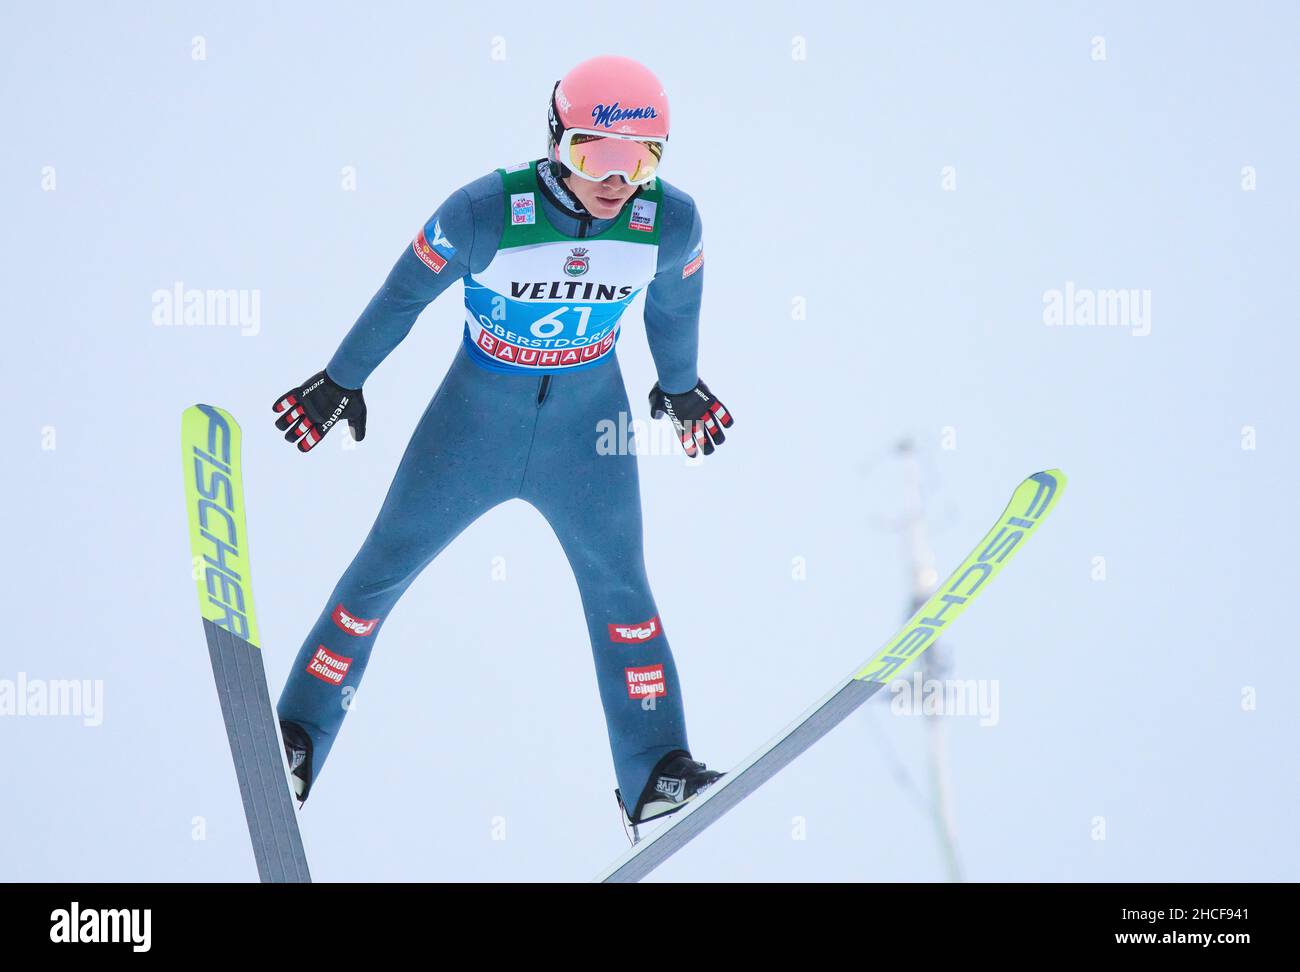 Jan Hoerl, AUT en vuelo en el torneo Four Hills Ski Jumping en Audi Arena y Schattenbergschanze Oberstdorf, Baviera, Alemania, 28 de diciembre de 2021. © Peter Schatz / Alamy Live News Foto de stock